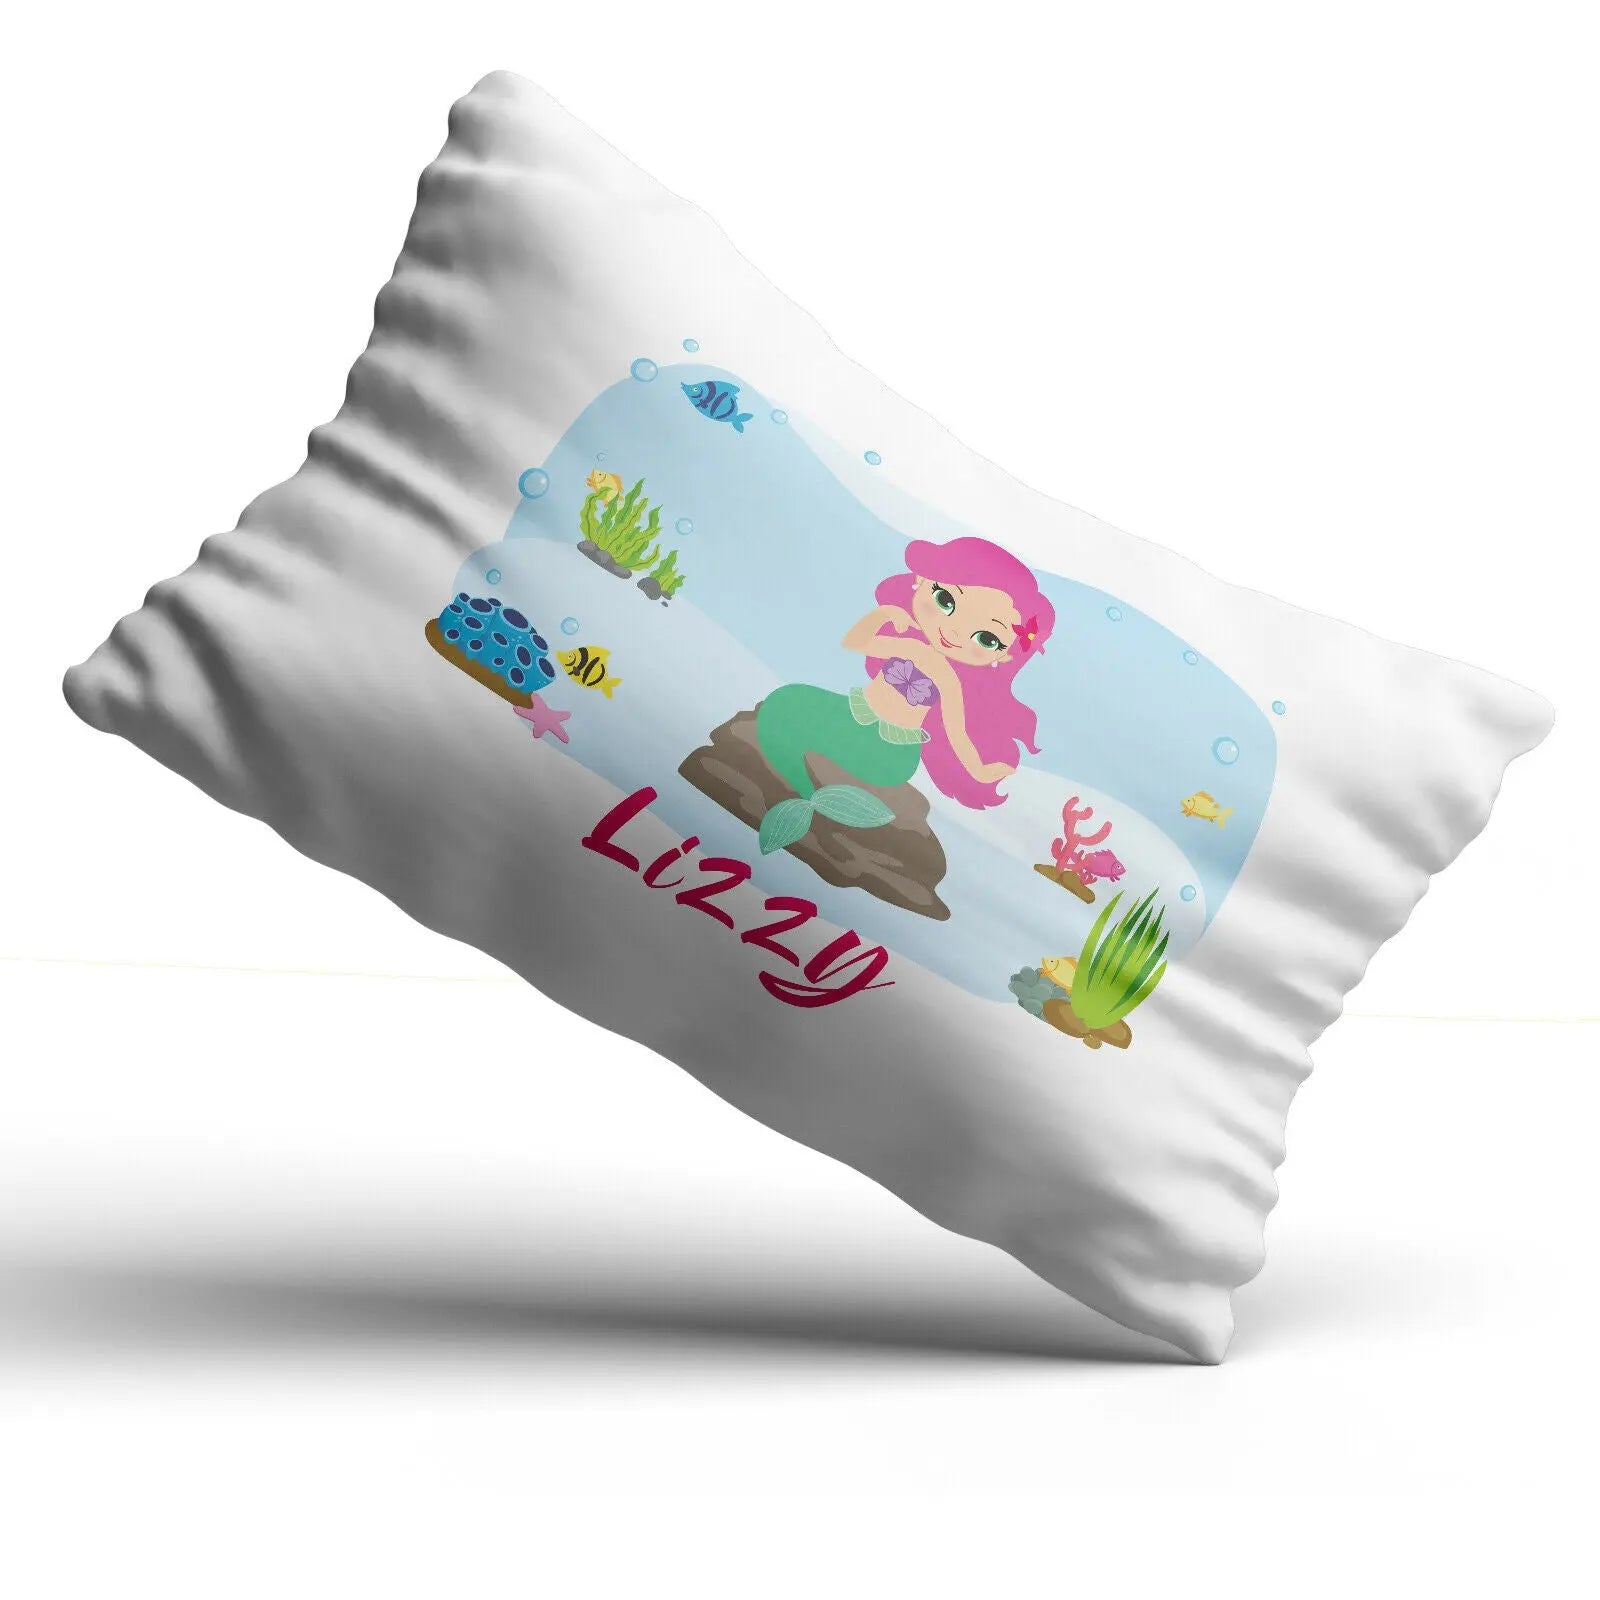 Personalised Mermaid Pillow Case Printed Gift Children Custom Print - Pink Hair - CushionPop